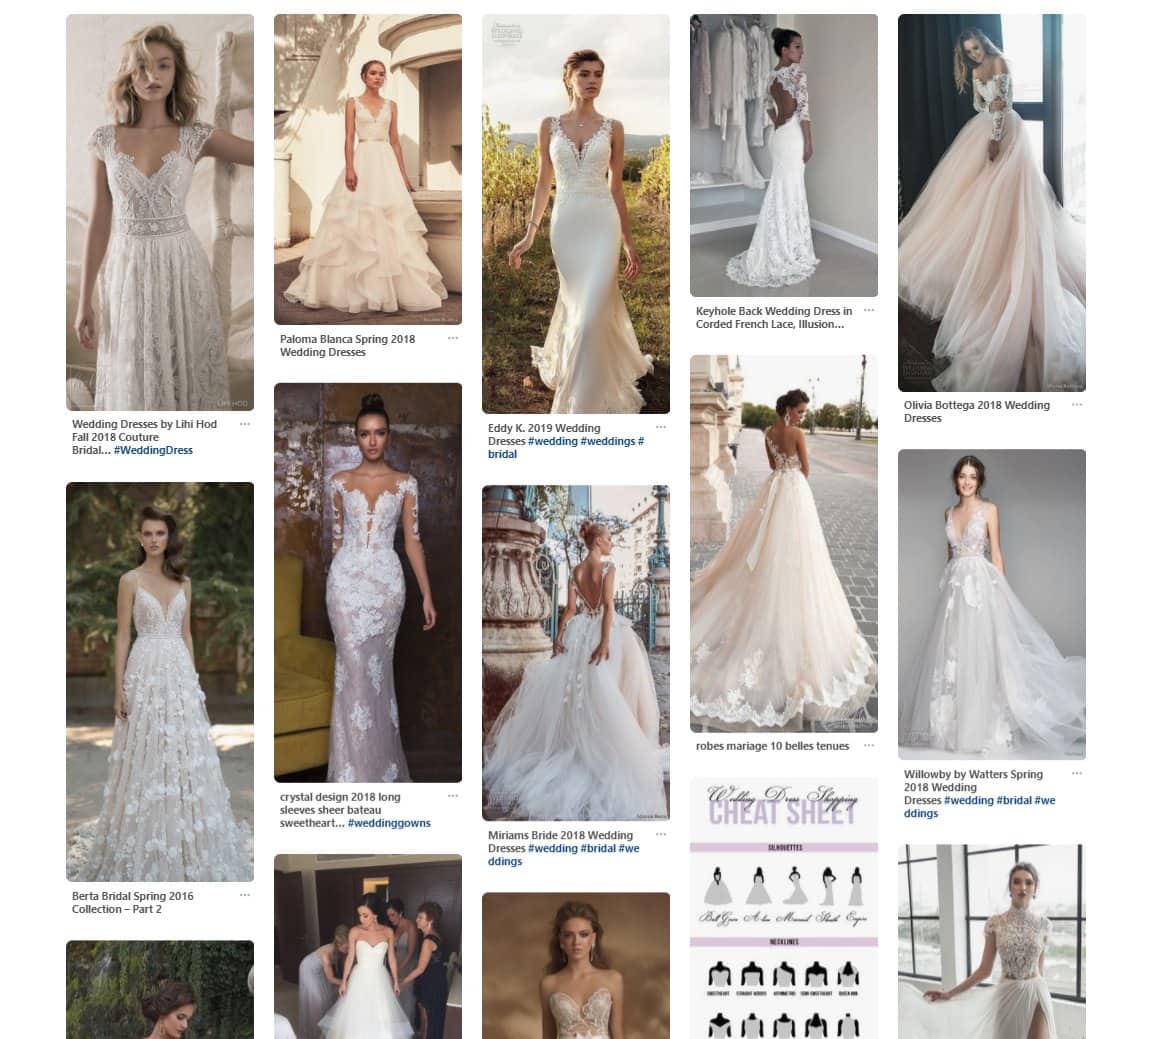 Wedding dresses inspiration - replace it